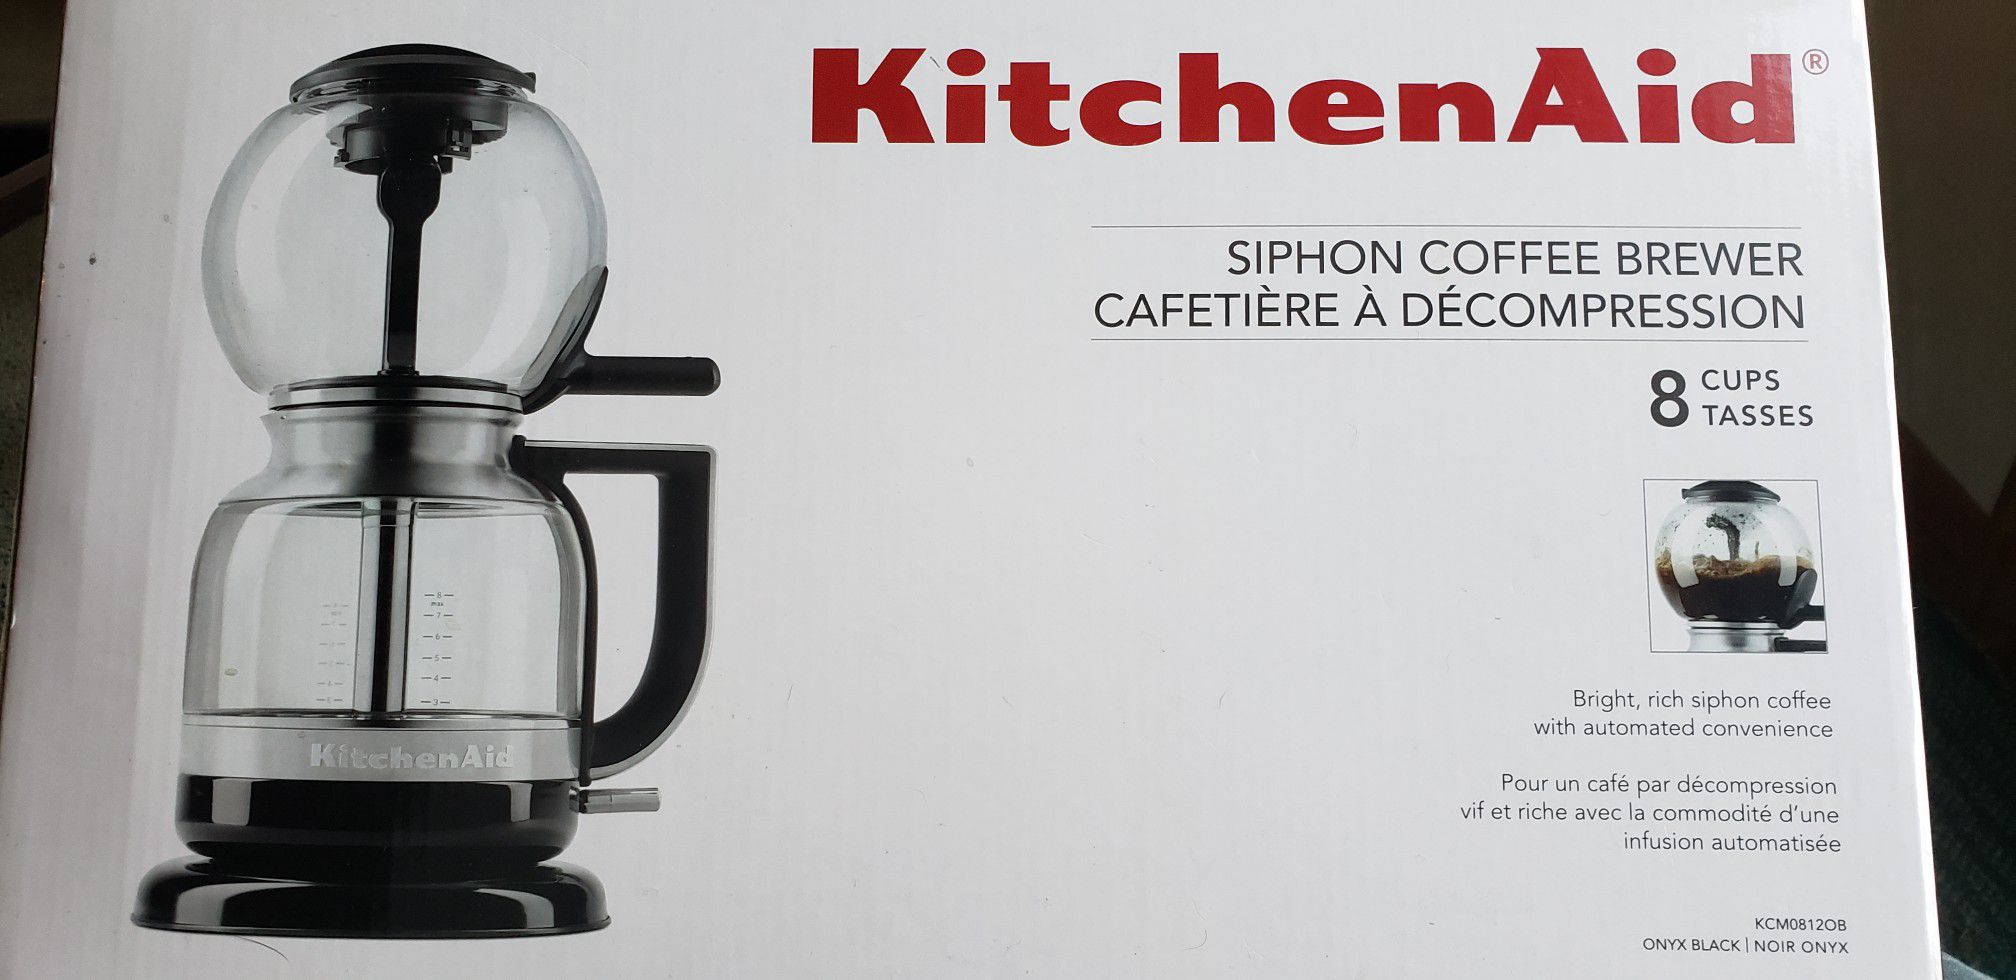 KitchenAid Siphon Coffee Brewer